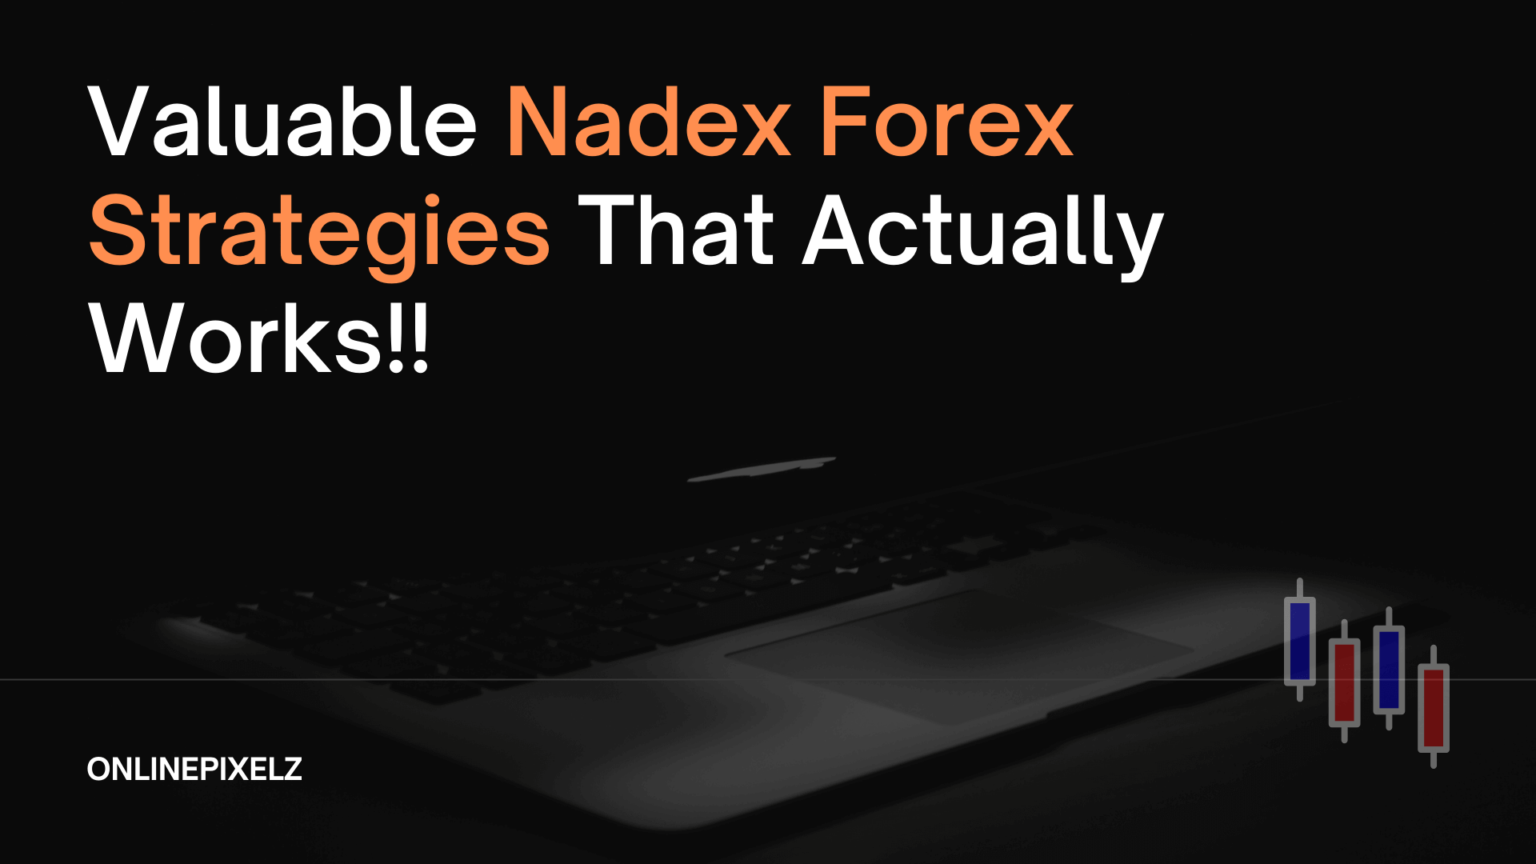 Nadex Forex Strategies